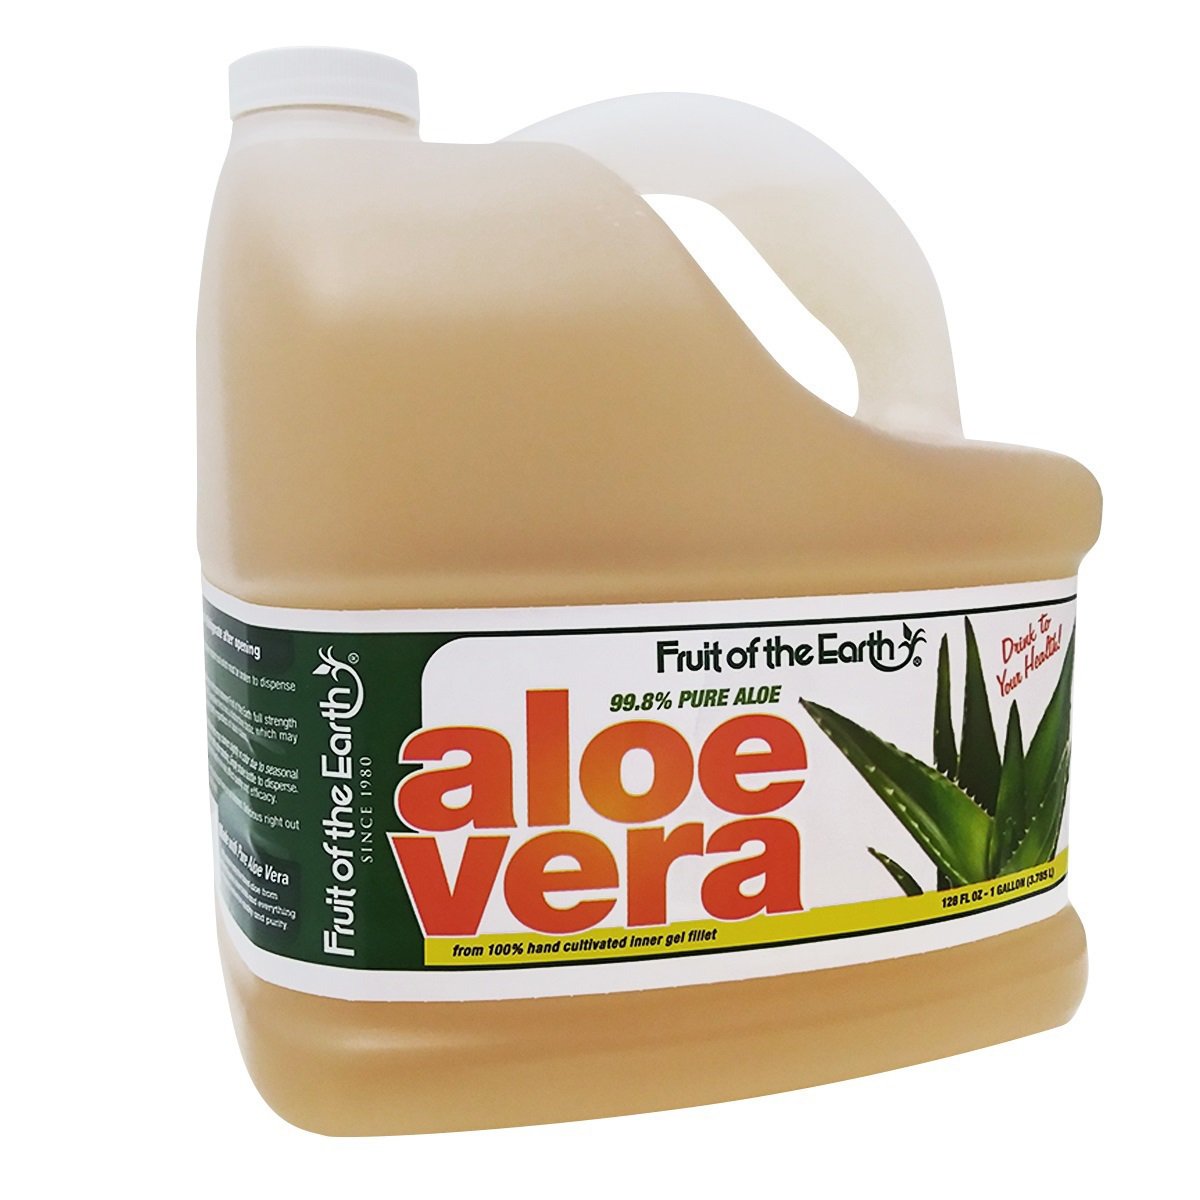 George Hanbury Gluren Likken Fruit Of The Earth 99.8% Aloe Vera Juice - Shop Vitamins & Supplements at  H-E-B